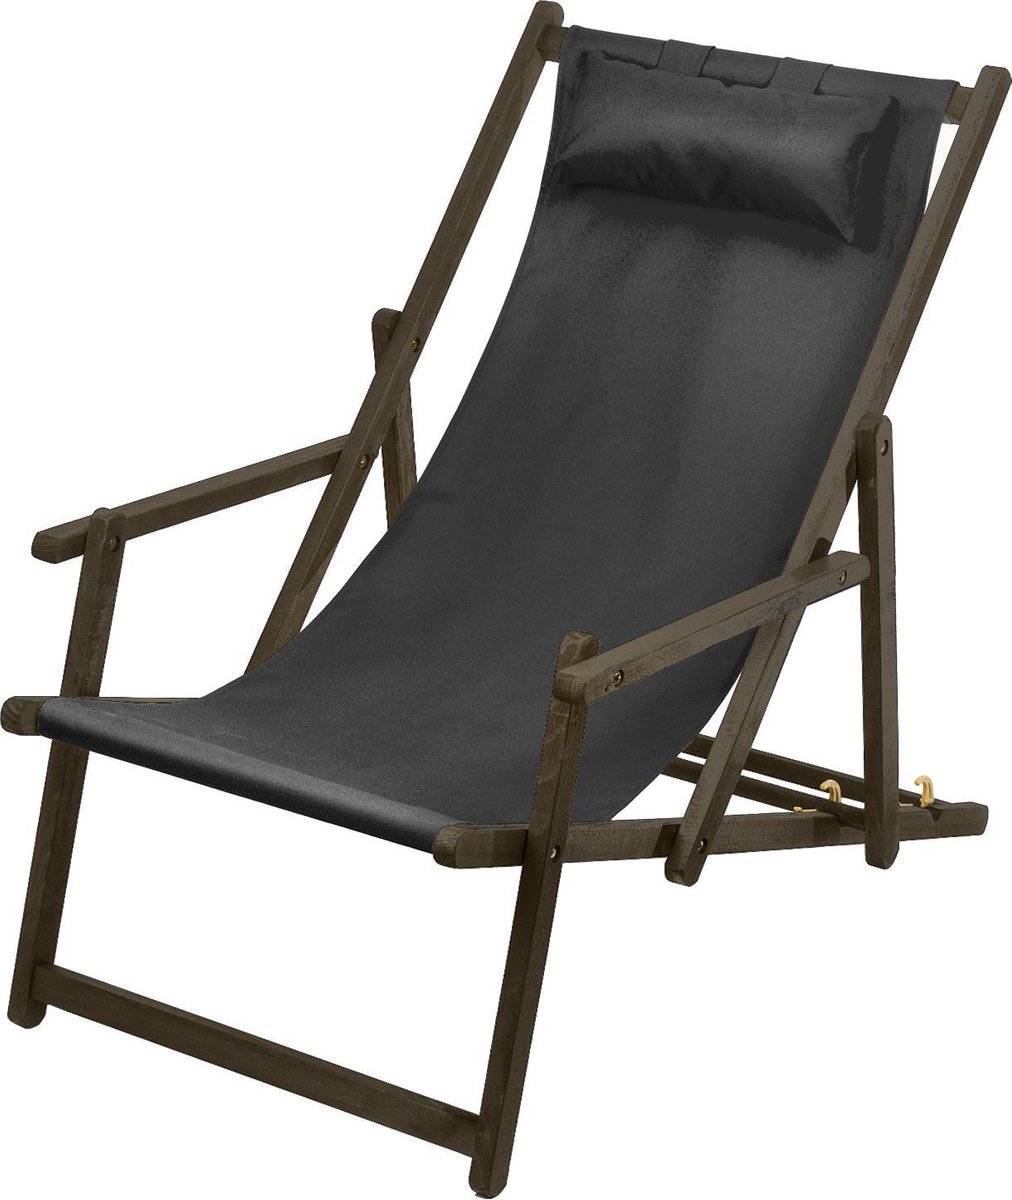 Ligstoel met armleuning en kussen GreenBlue Premium GB283 zwart